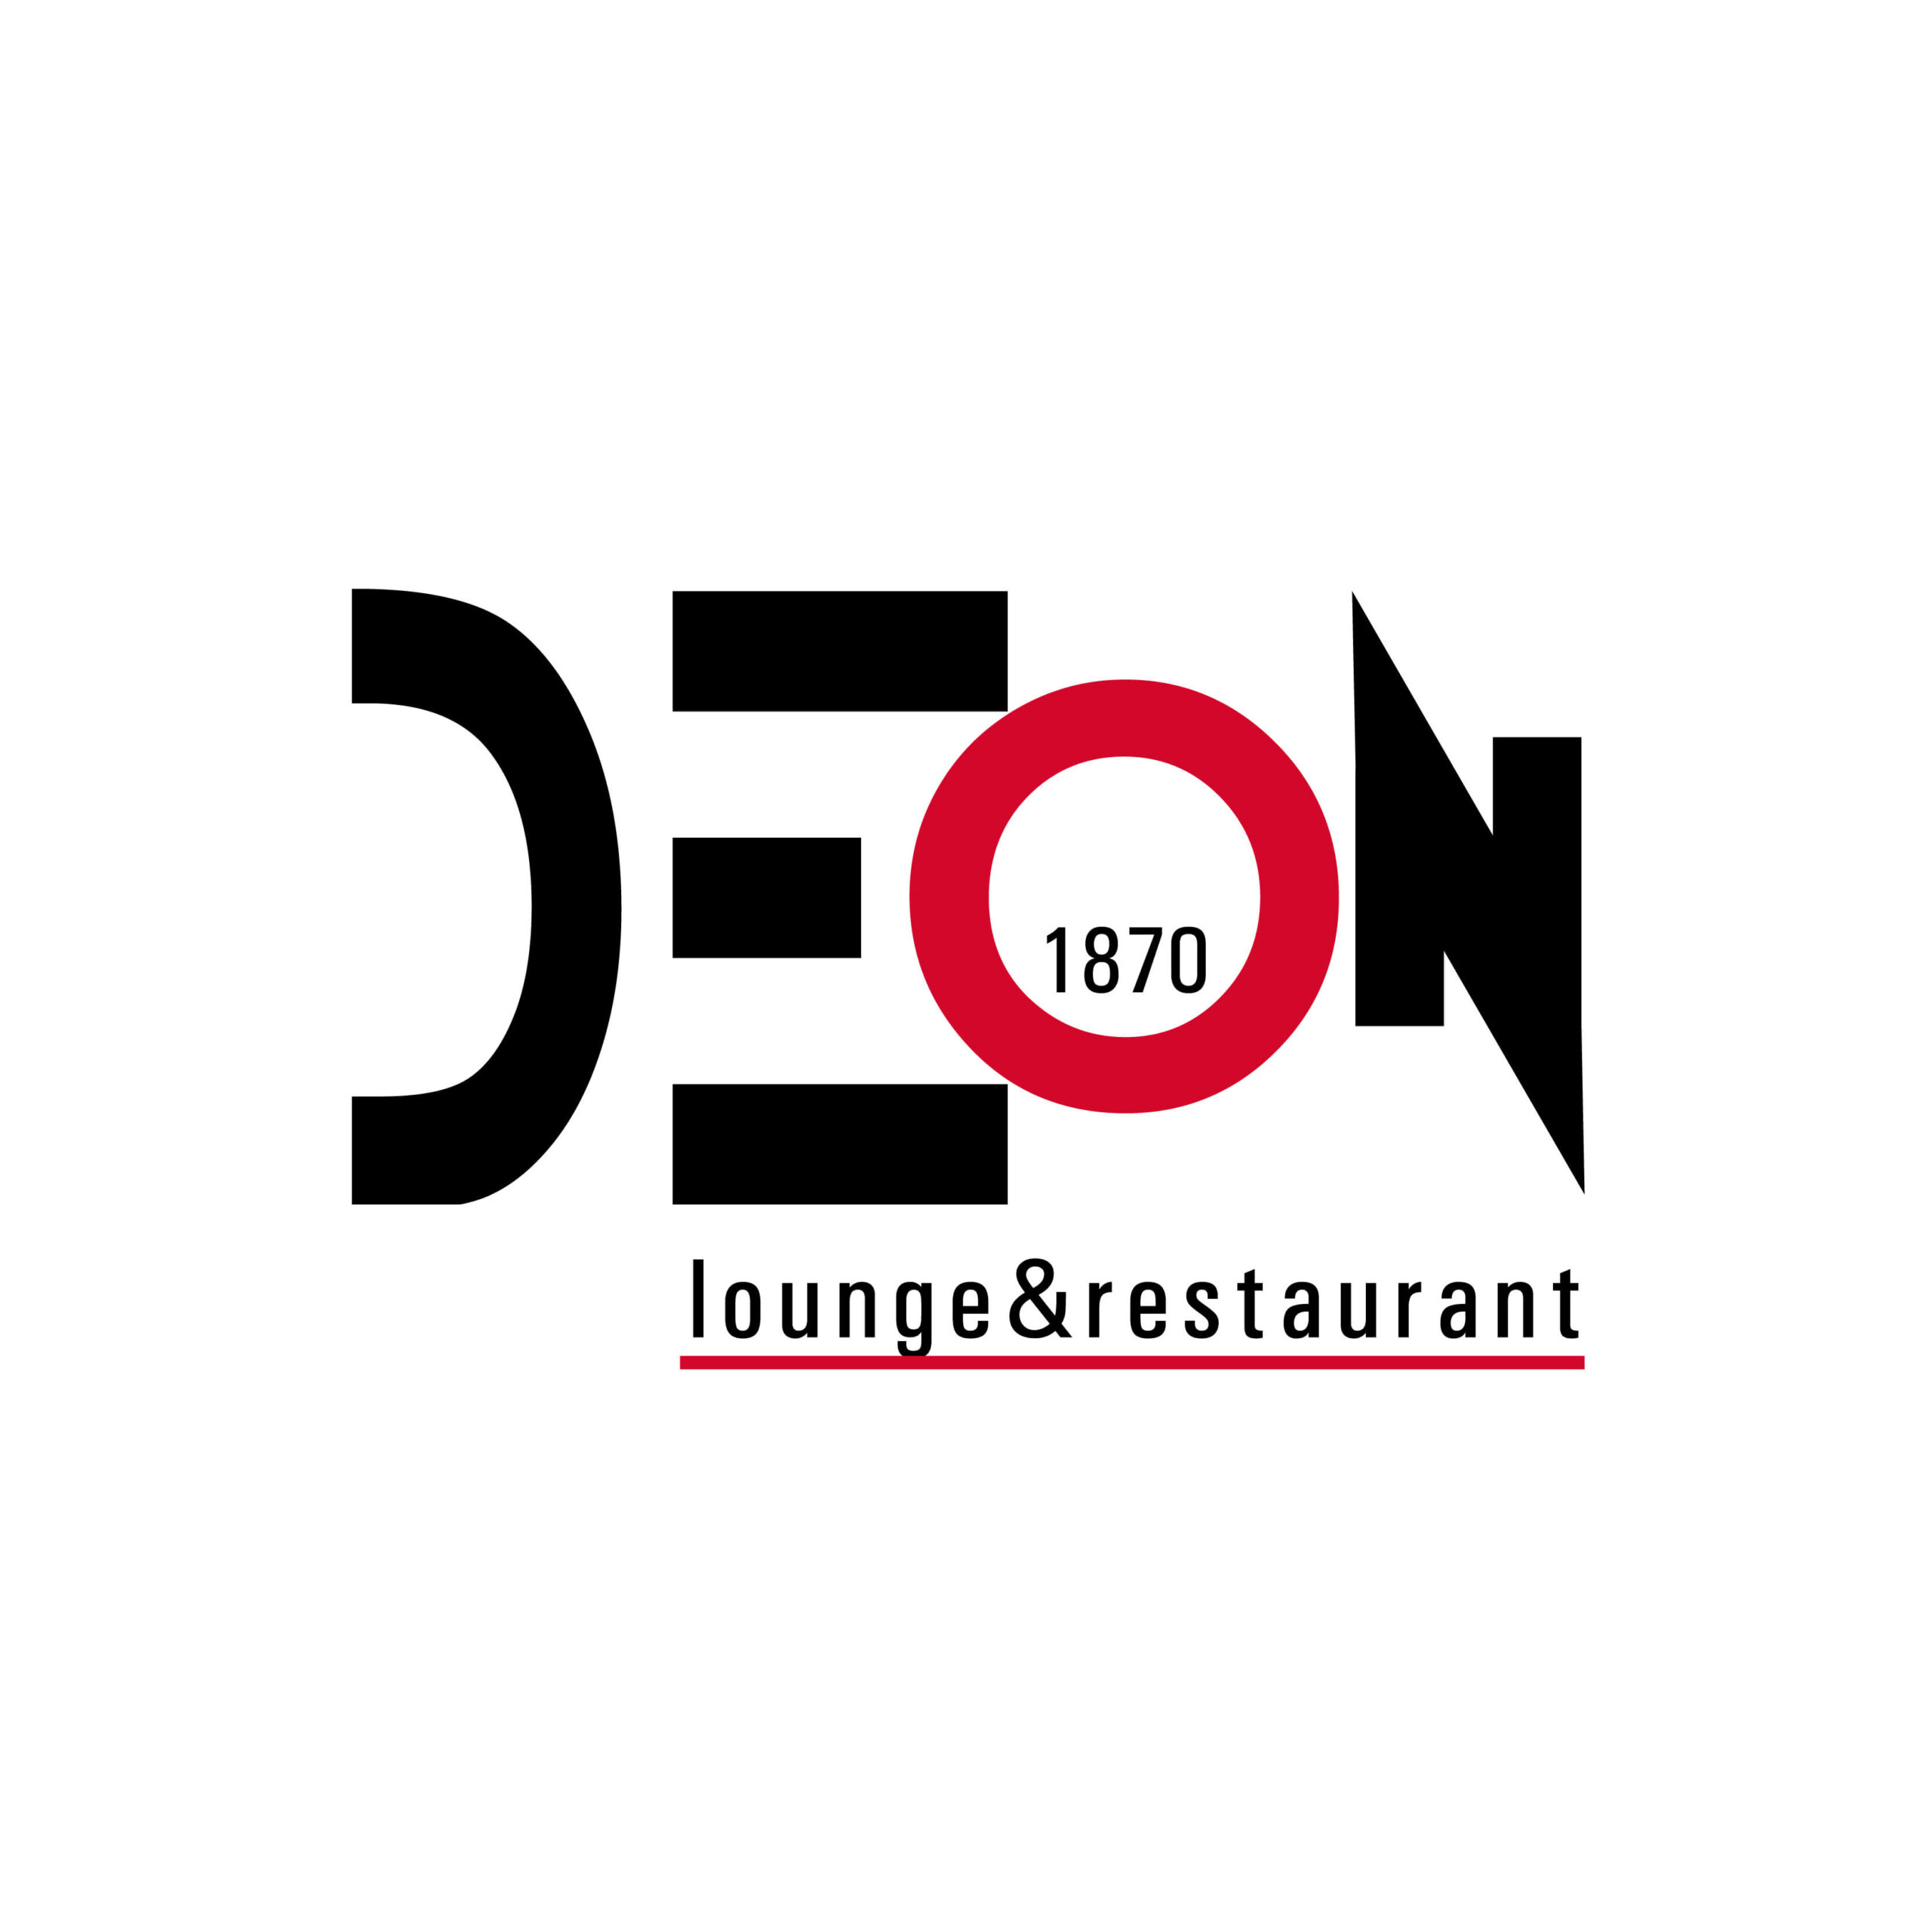 DEON lounge & restaurant